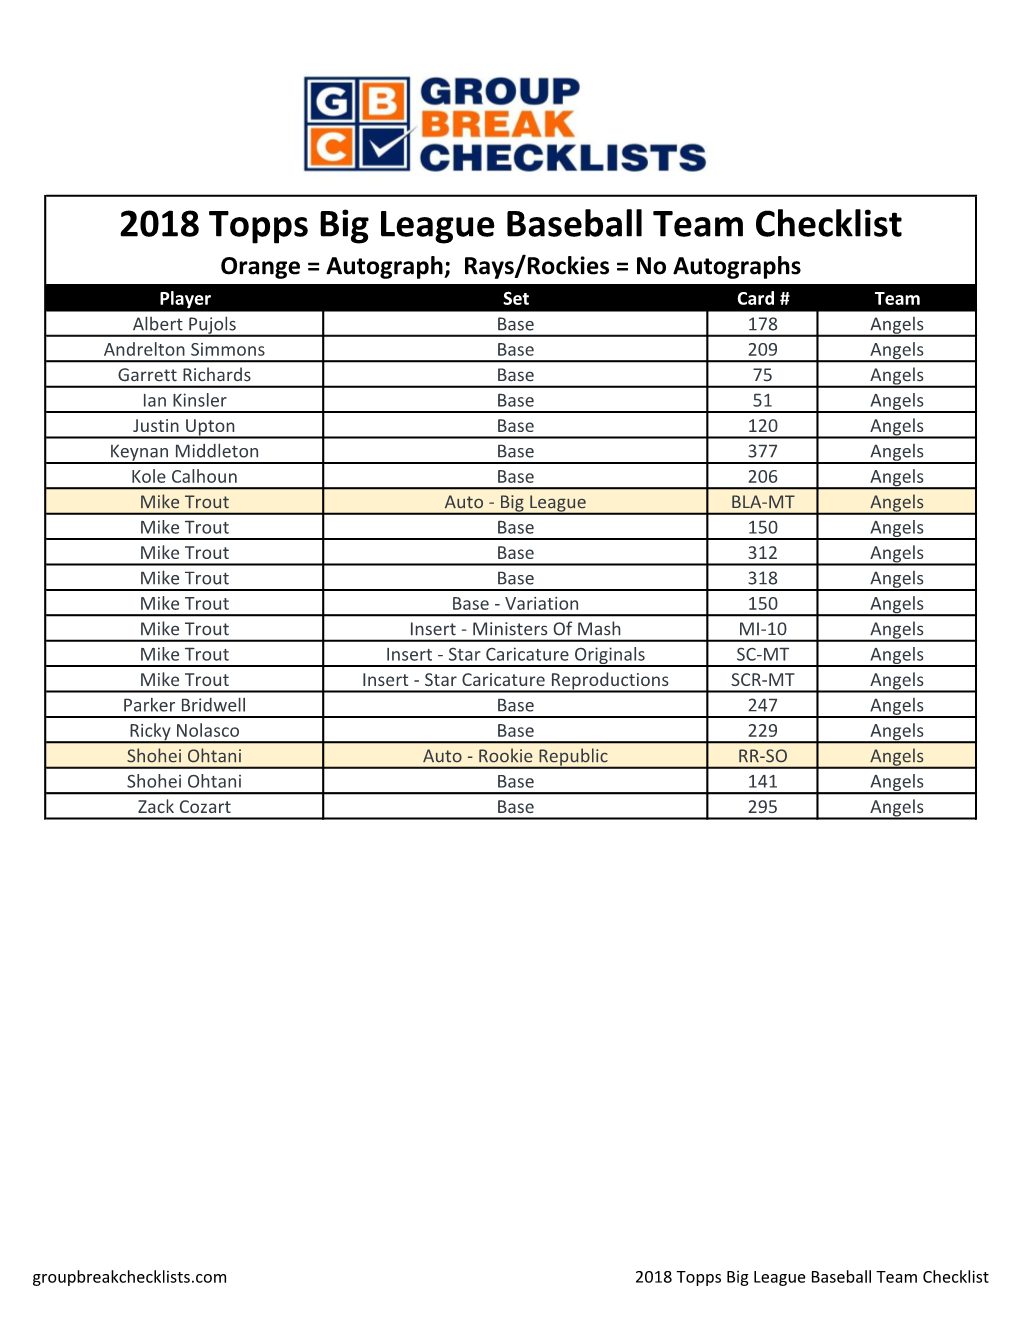 2018 Topps Big League Baseball Checklist